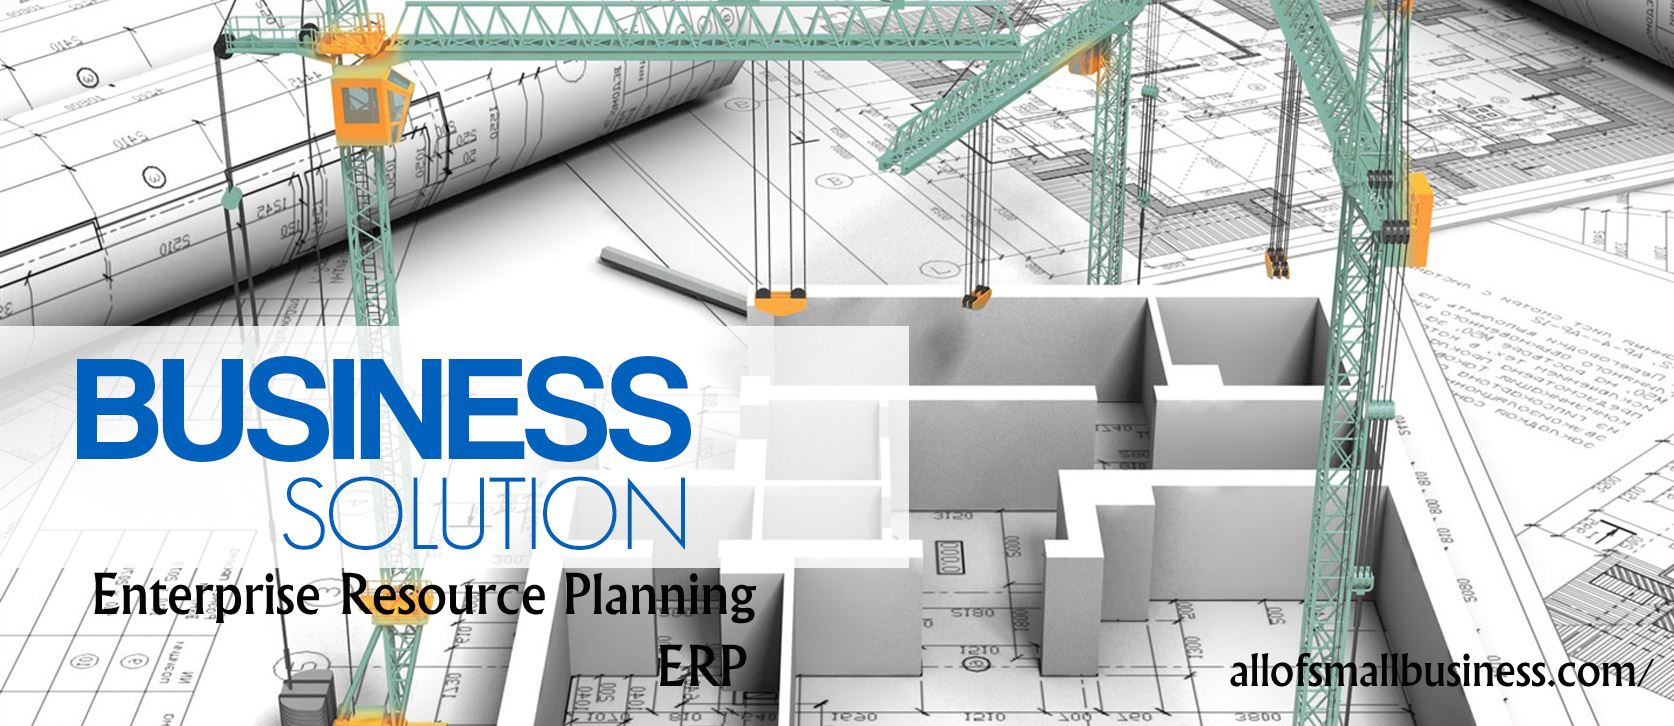 Enterprise resource planning